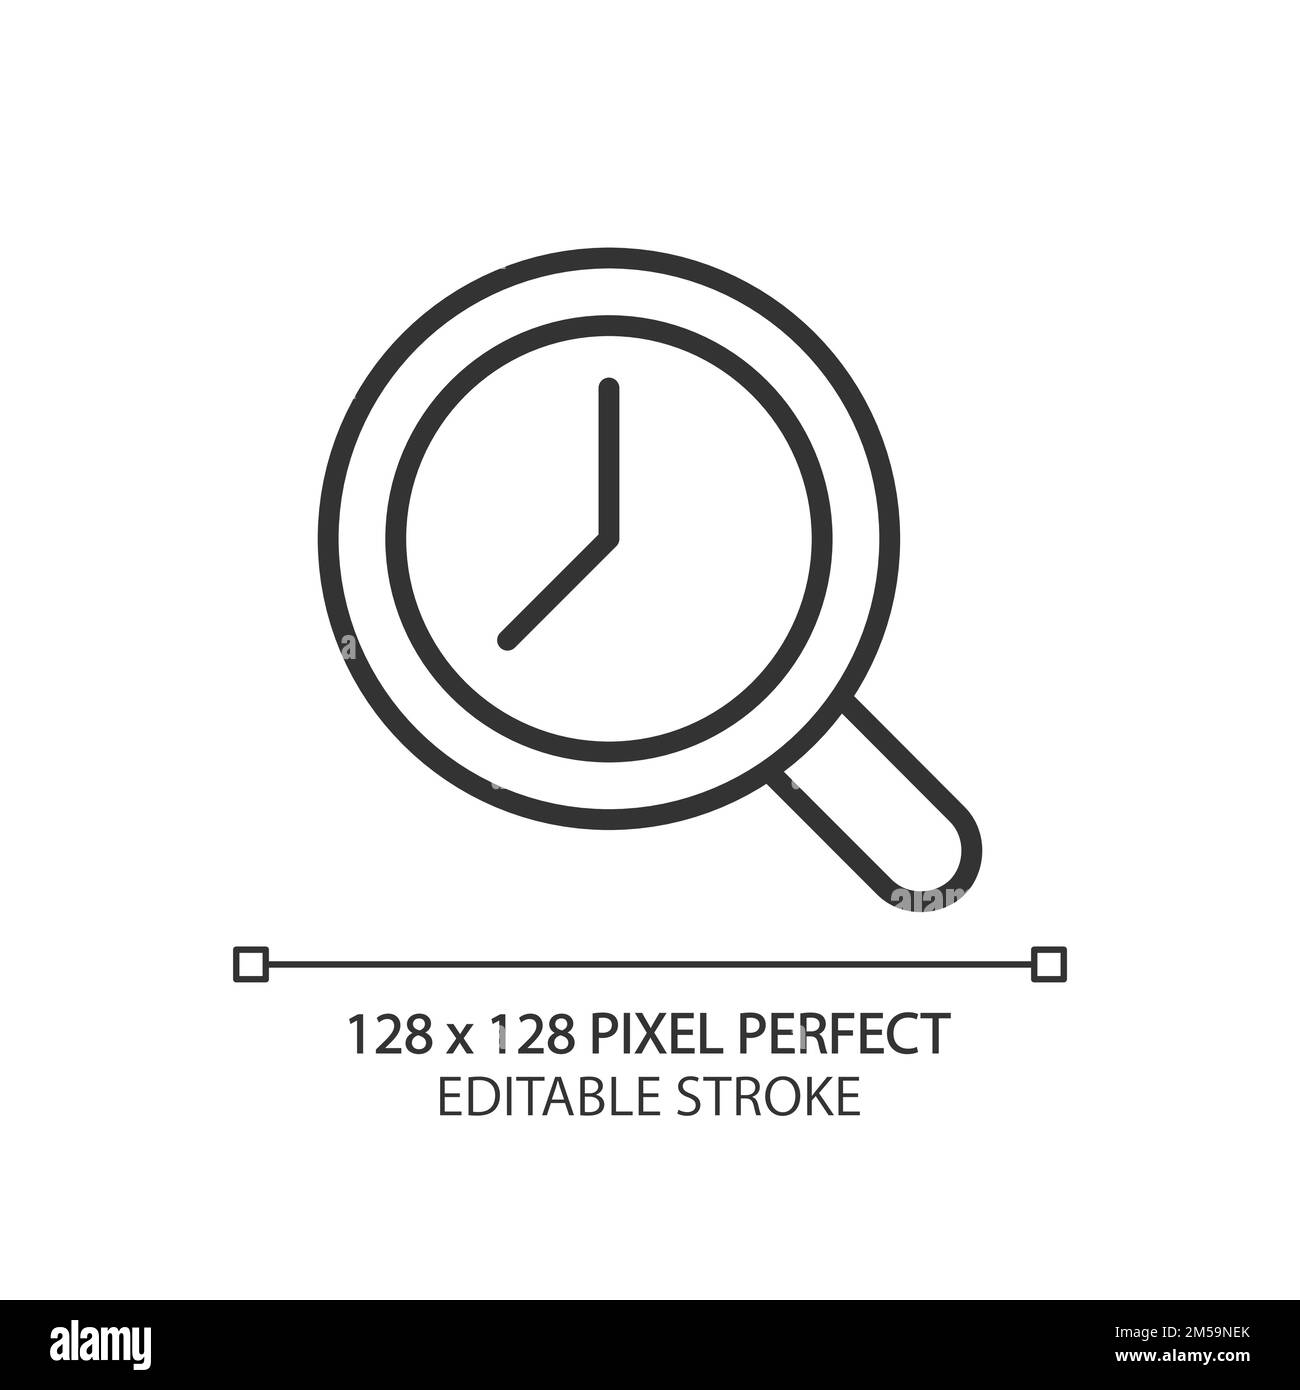 Simple minimalistic line art folder icon. Pixel perfect, editable stroke  Stock Vector Image & Art - Alamy